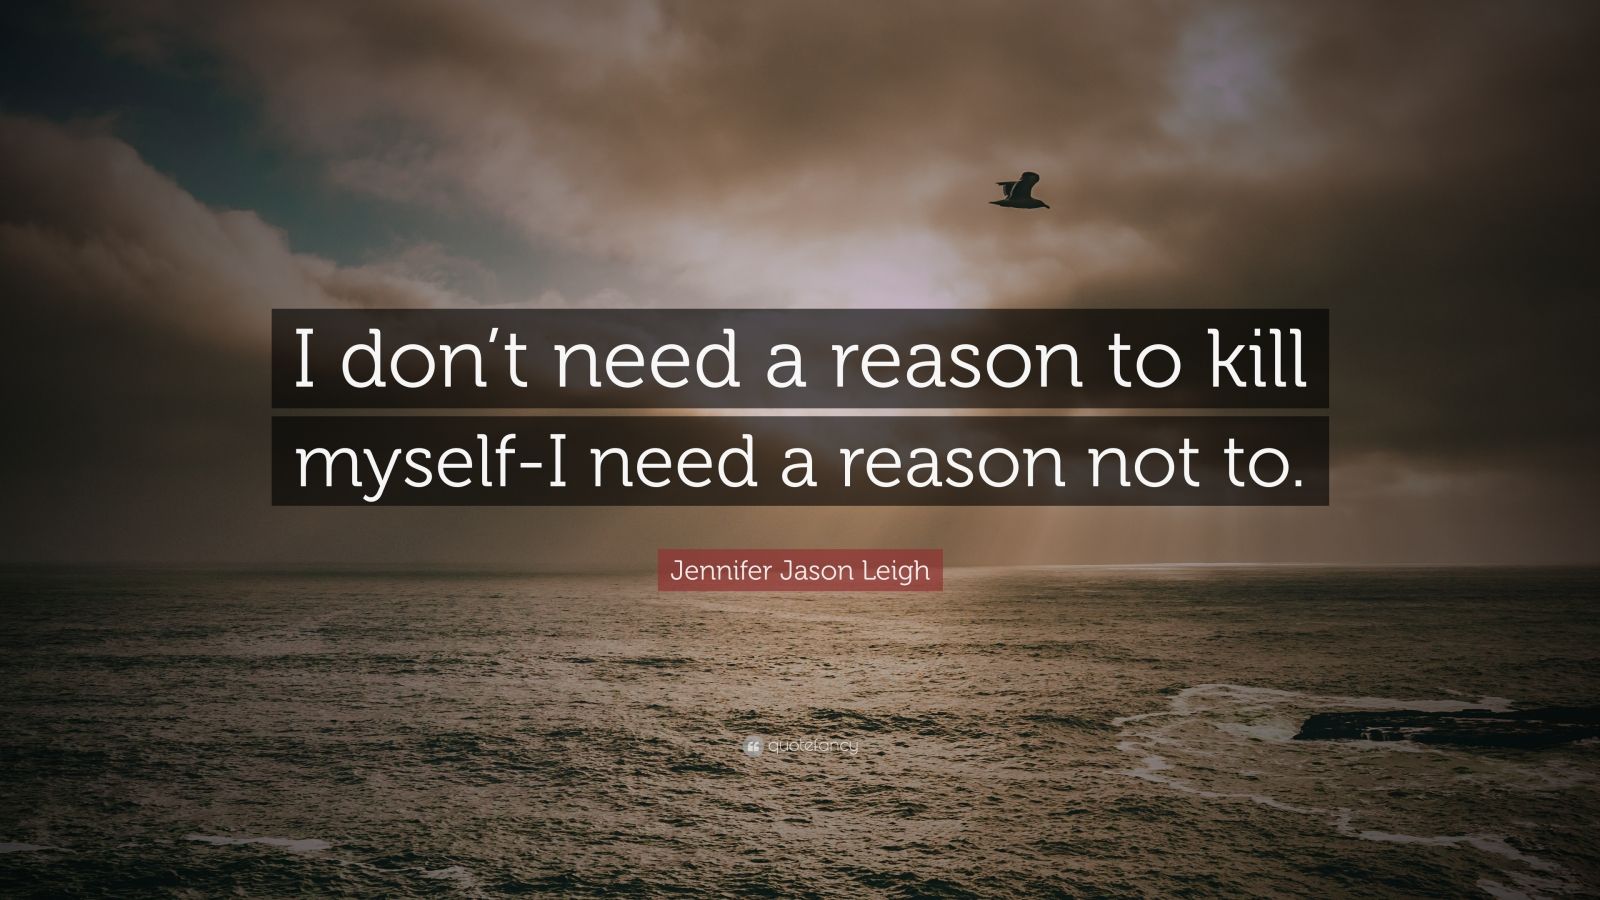 Jennifer Jason Leigh Quote: "I don't need a reason to kill myself-I need a reason not to." (7 ...